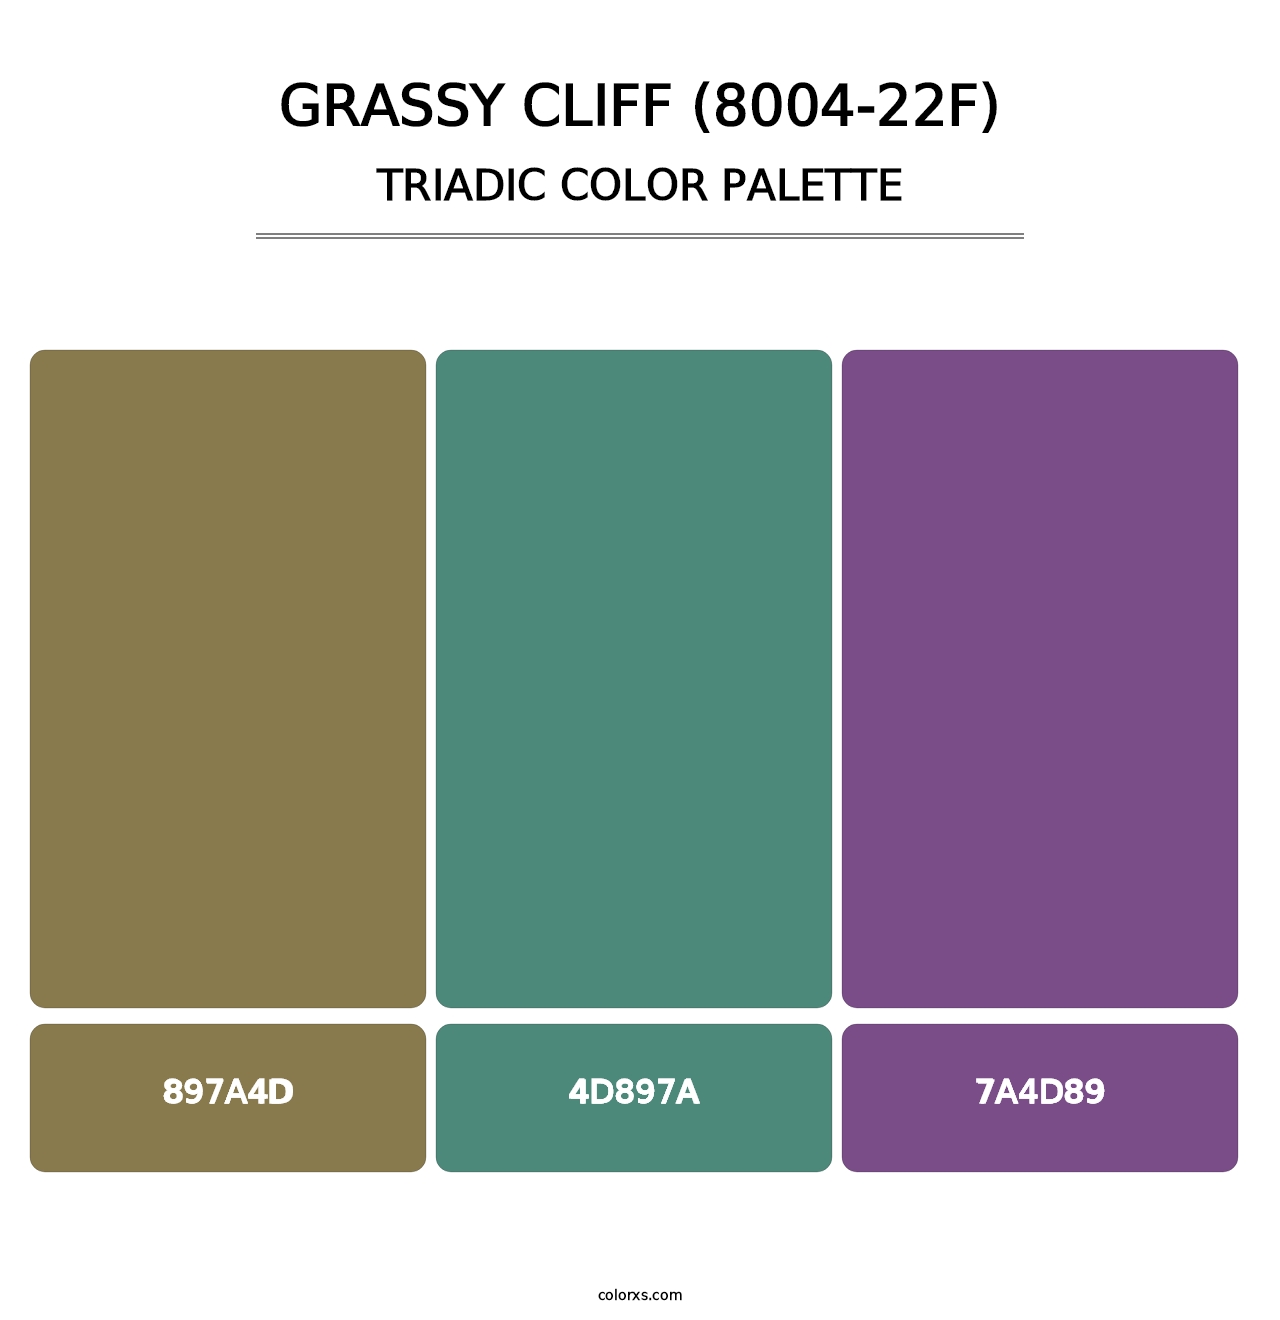 Grassy Cliff (8004-22F) - Triadic Color Palette